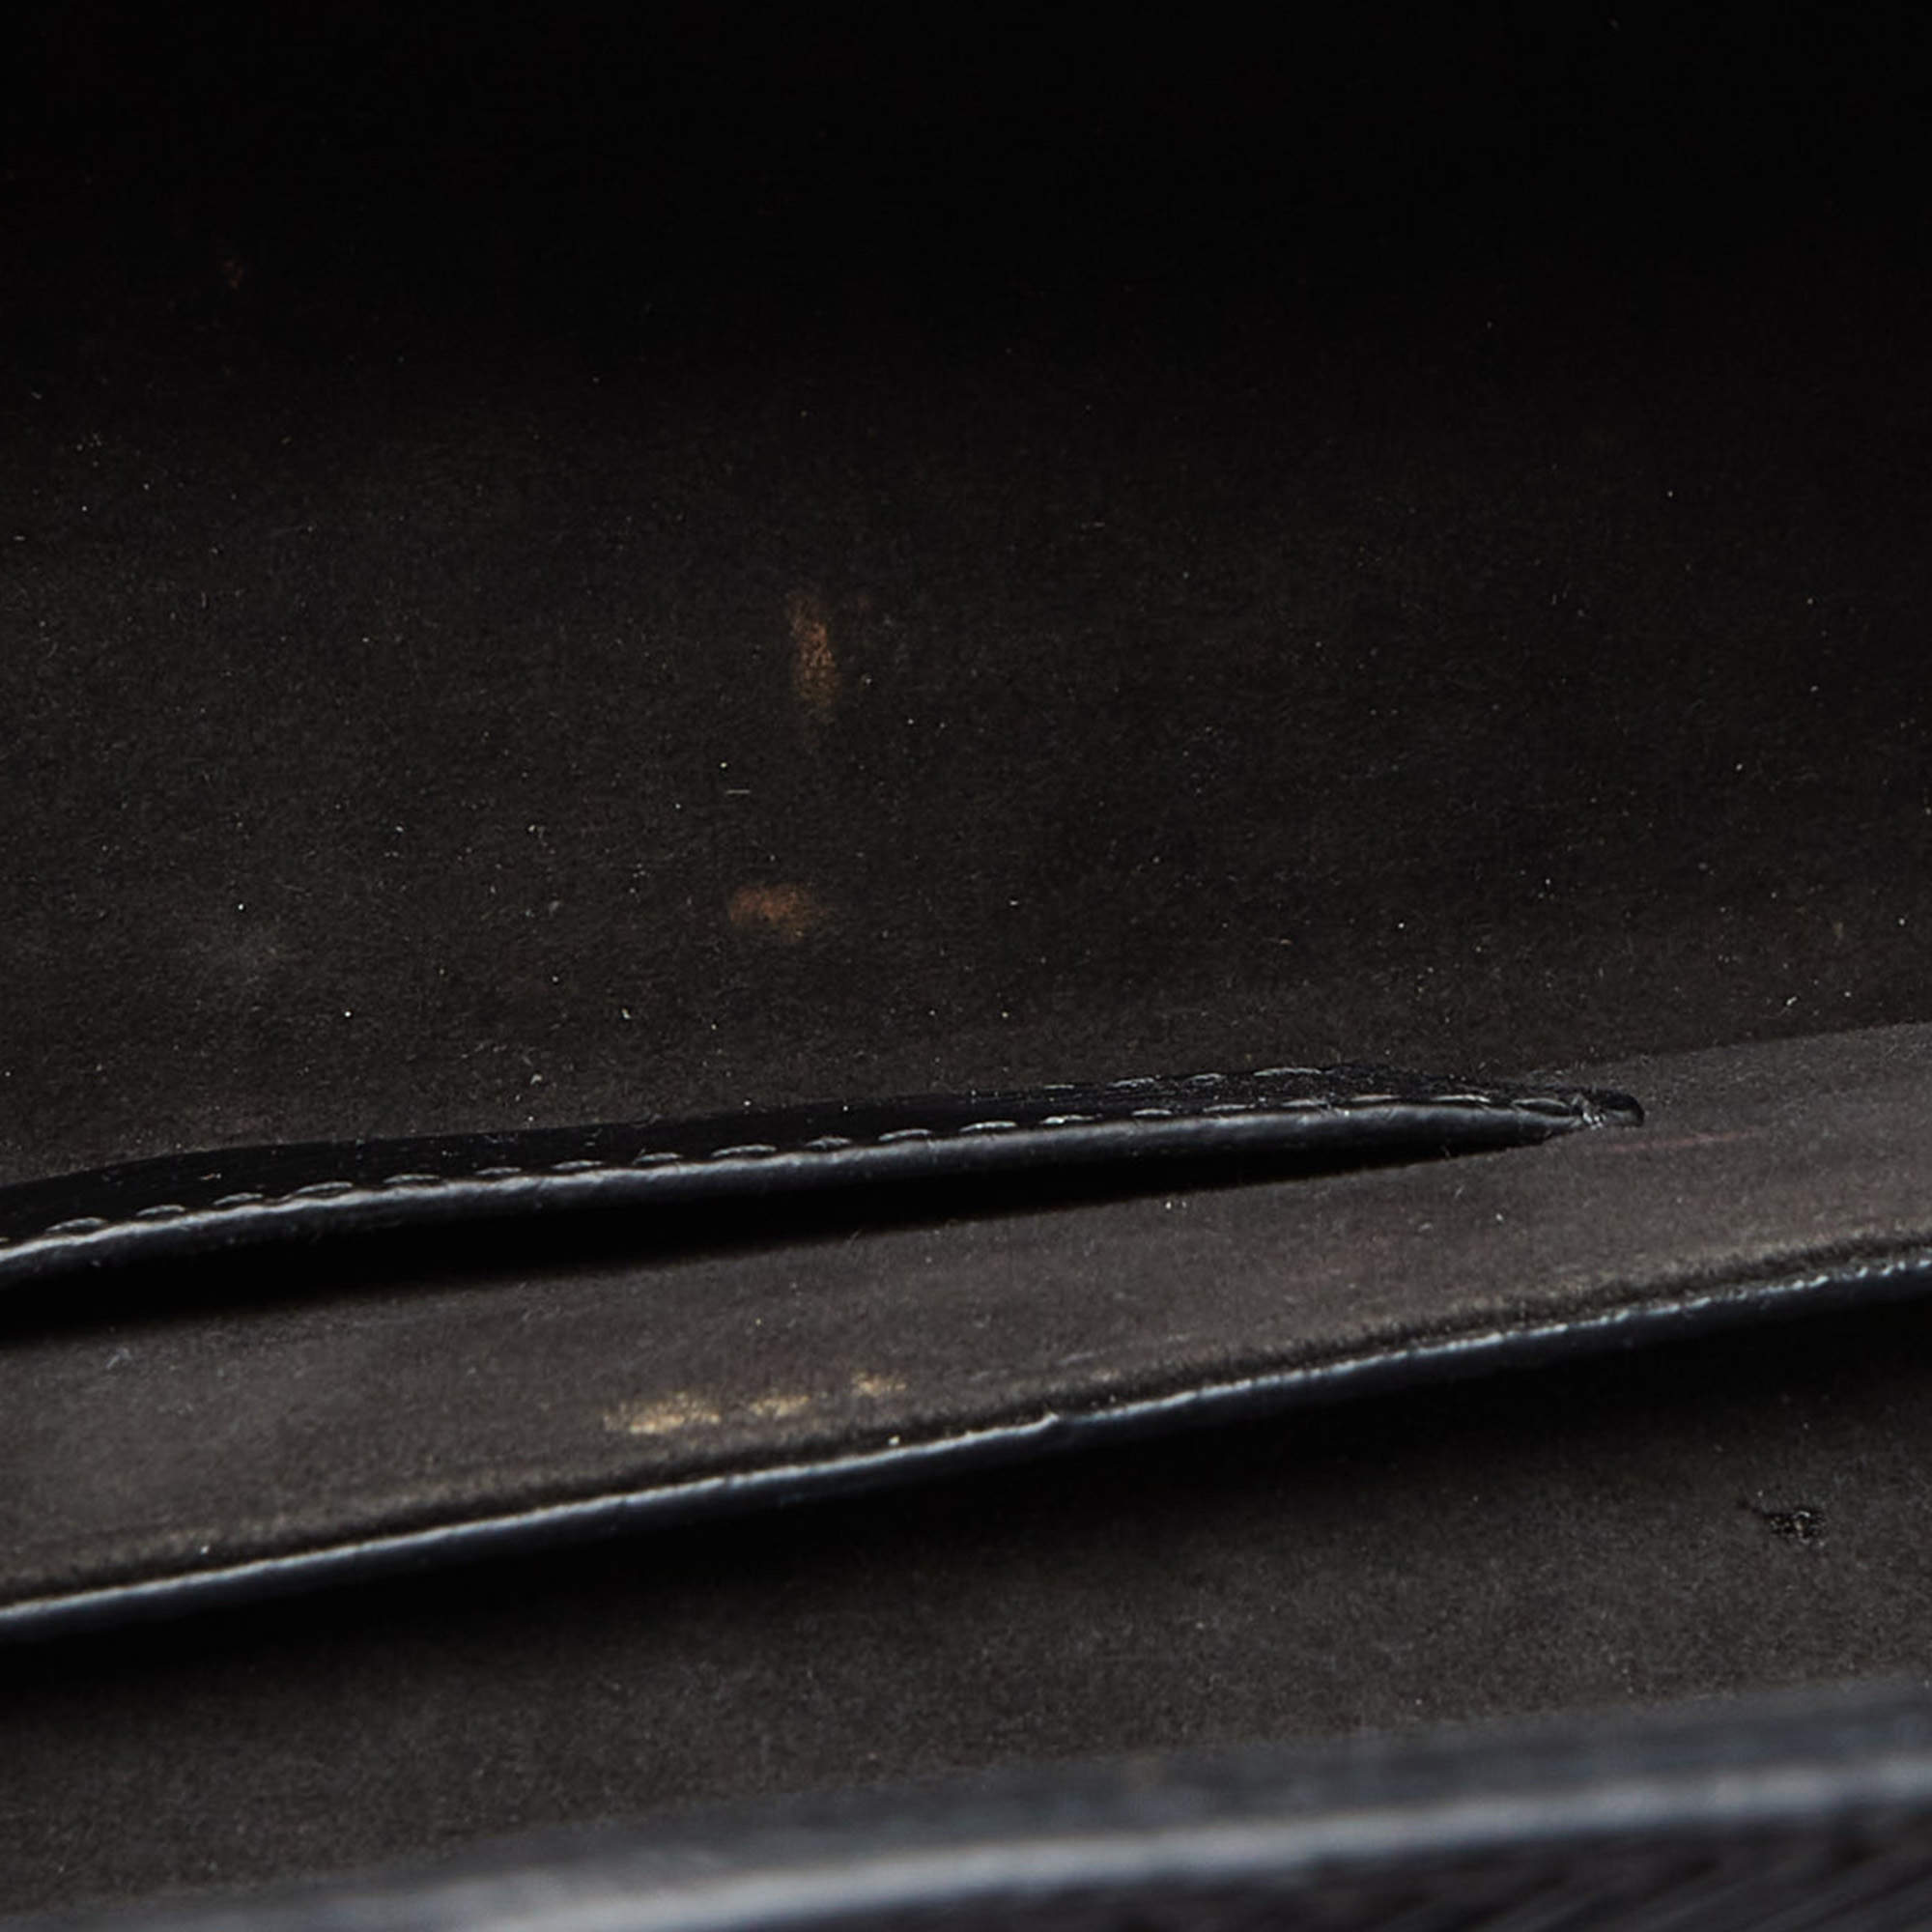 Louis VUITTON Cintura in pelle epi nera da 30 mm, fibb…